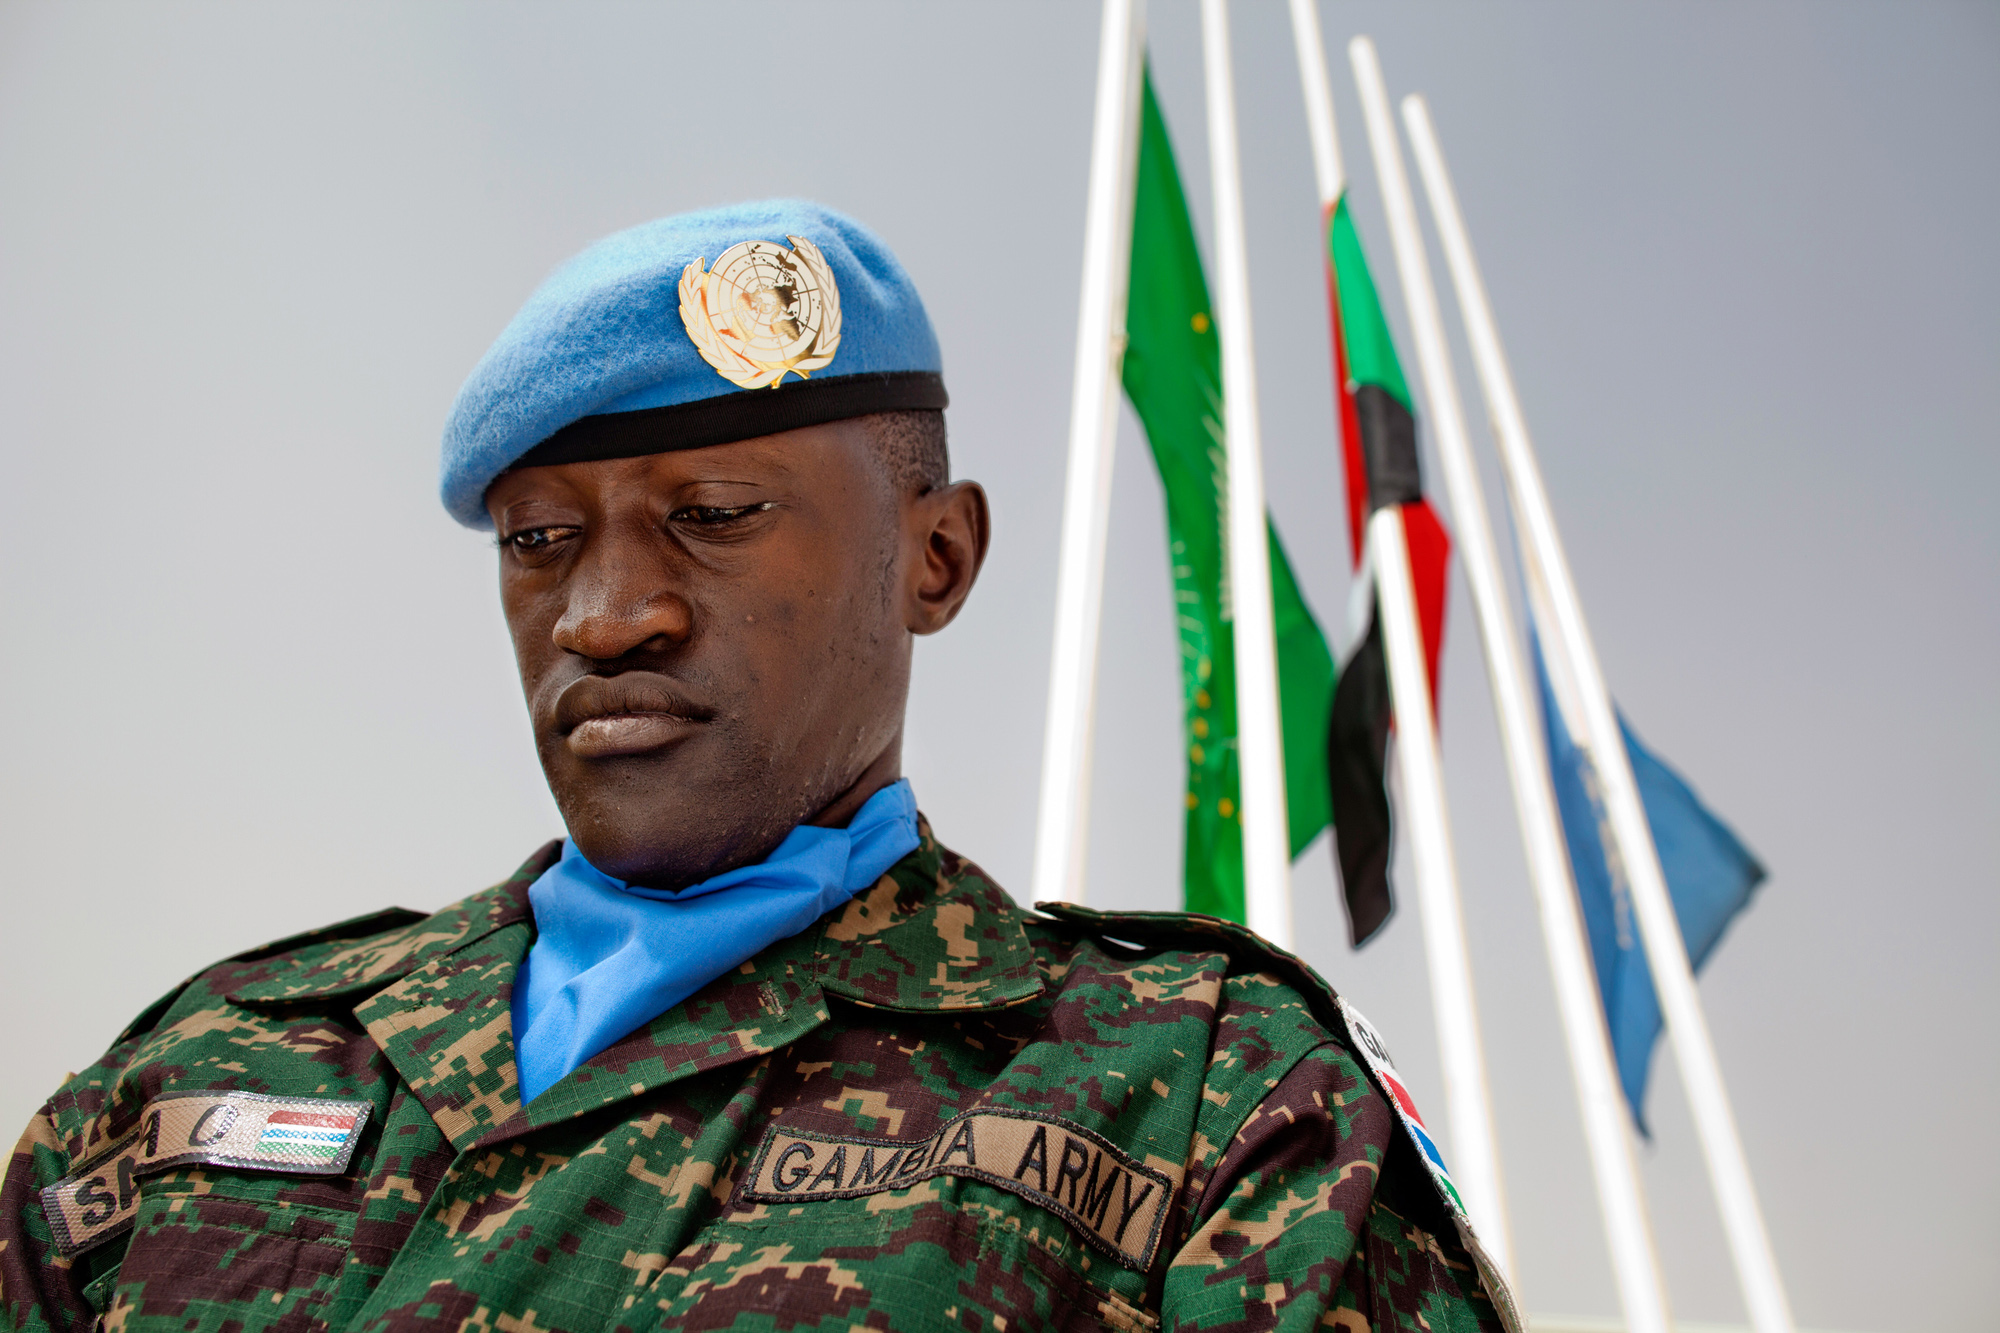 UN peacekeeper, head down, under three flags.